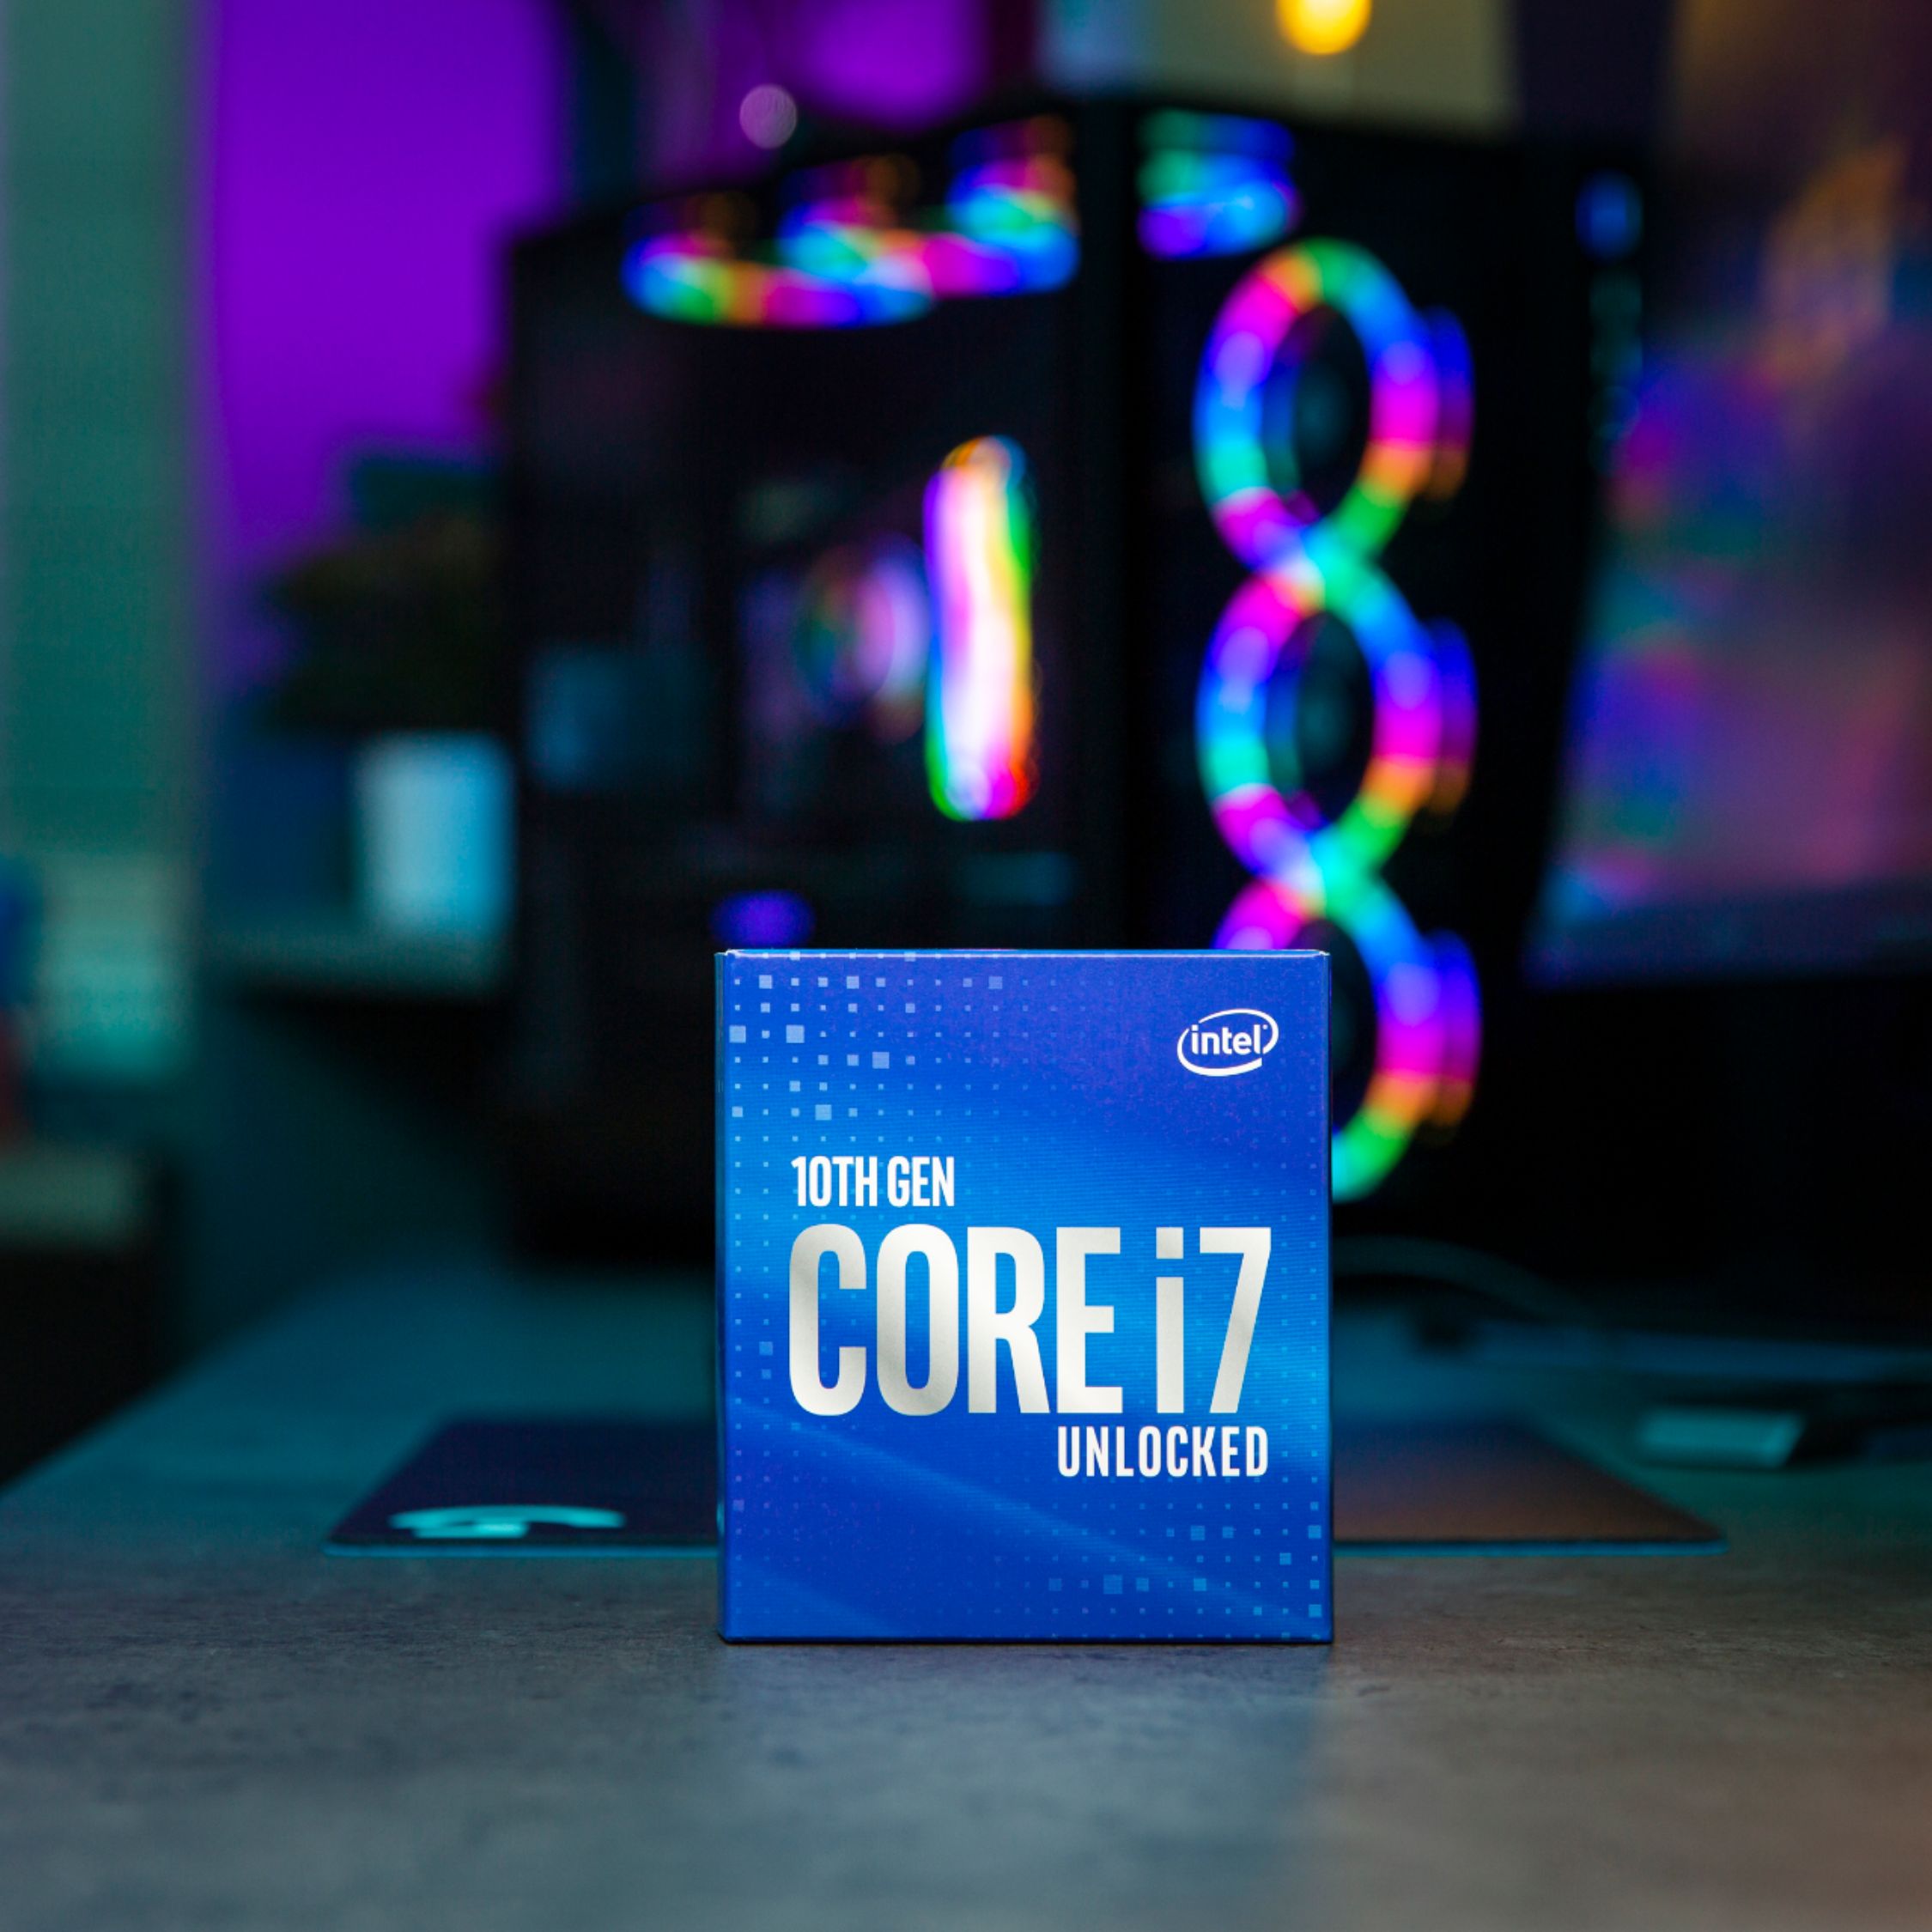 Intel Core i7-10700K 10th Generation 8-Core 16-Thread 3.8 GHz (5.1 GHz  Turbo) Socket LGA1200 Unlocked Desktop Processor BX8070110700K - Best Buy